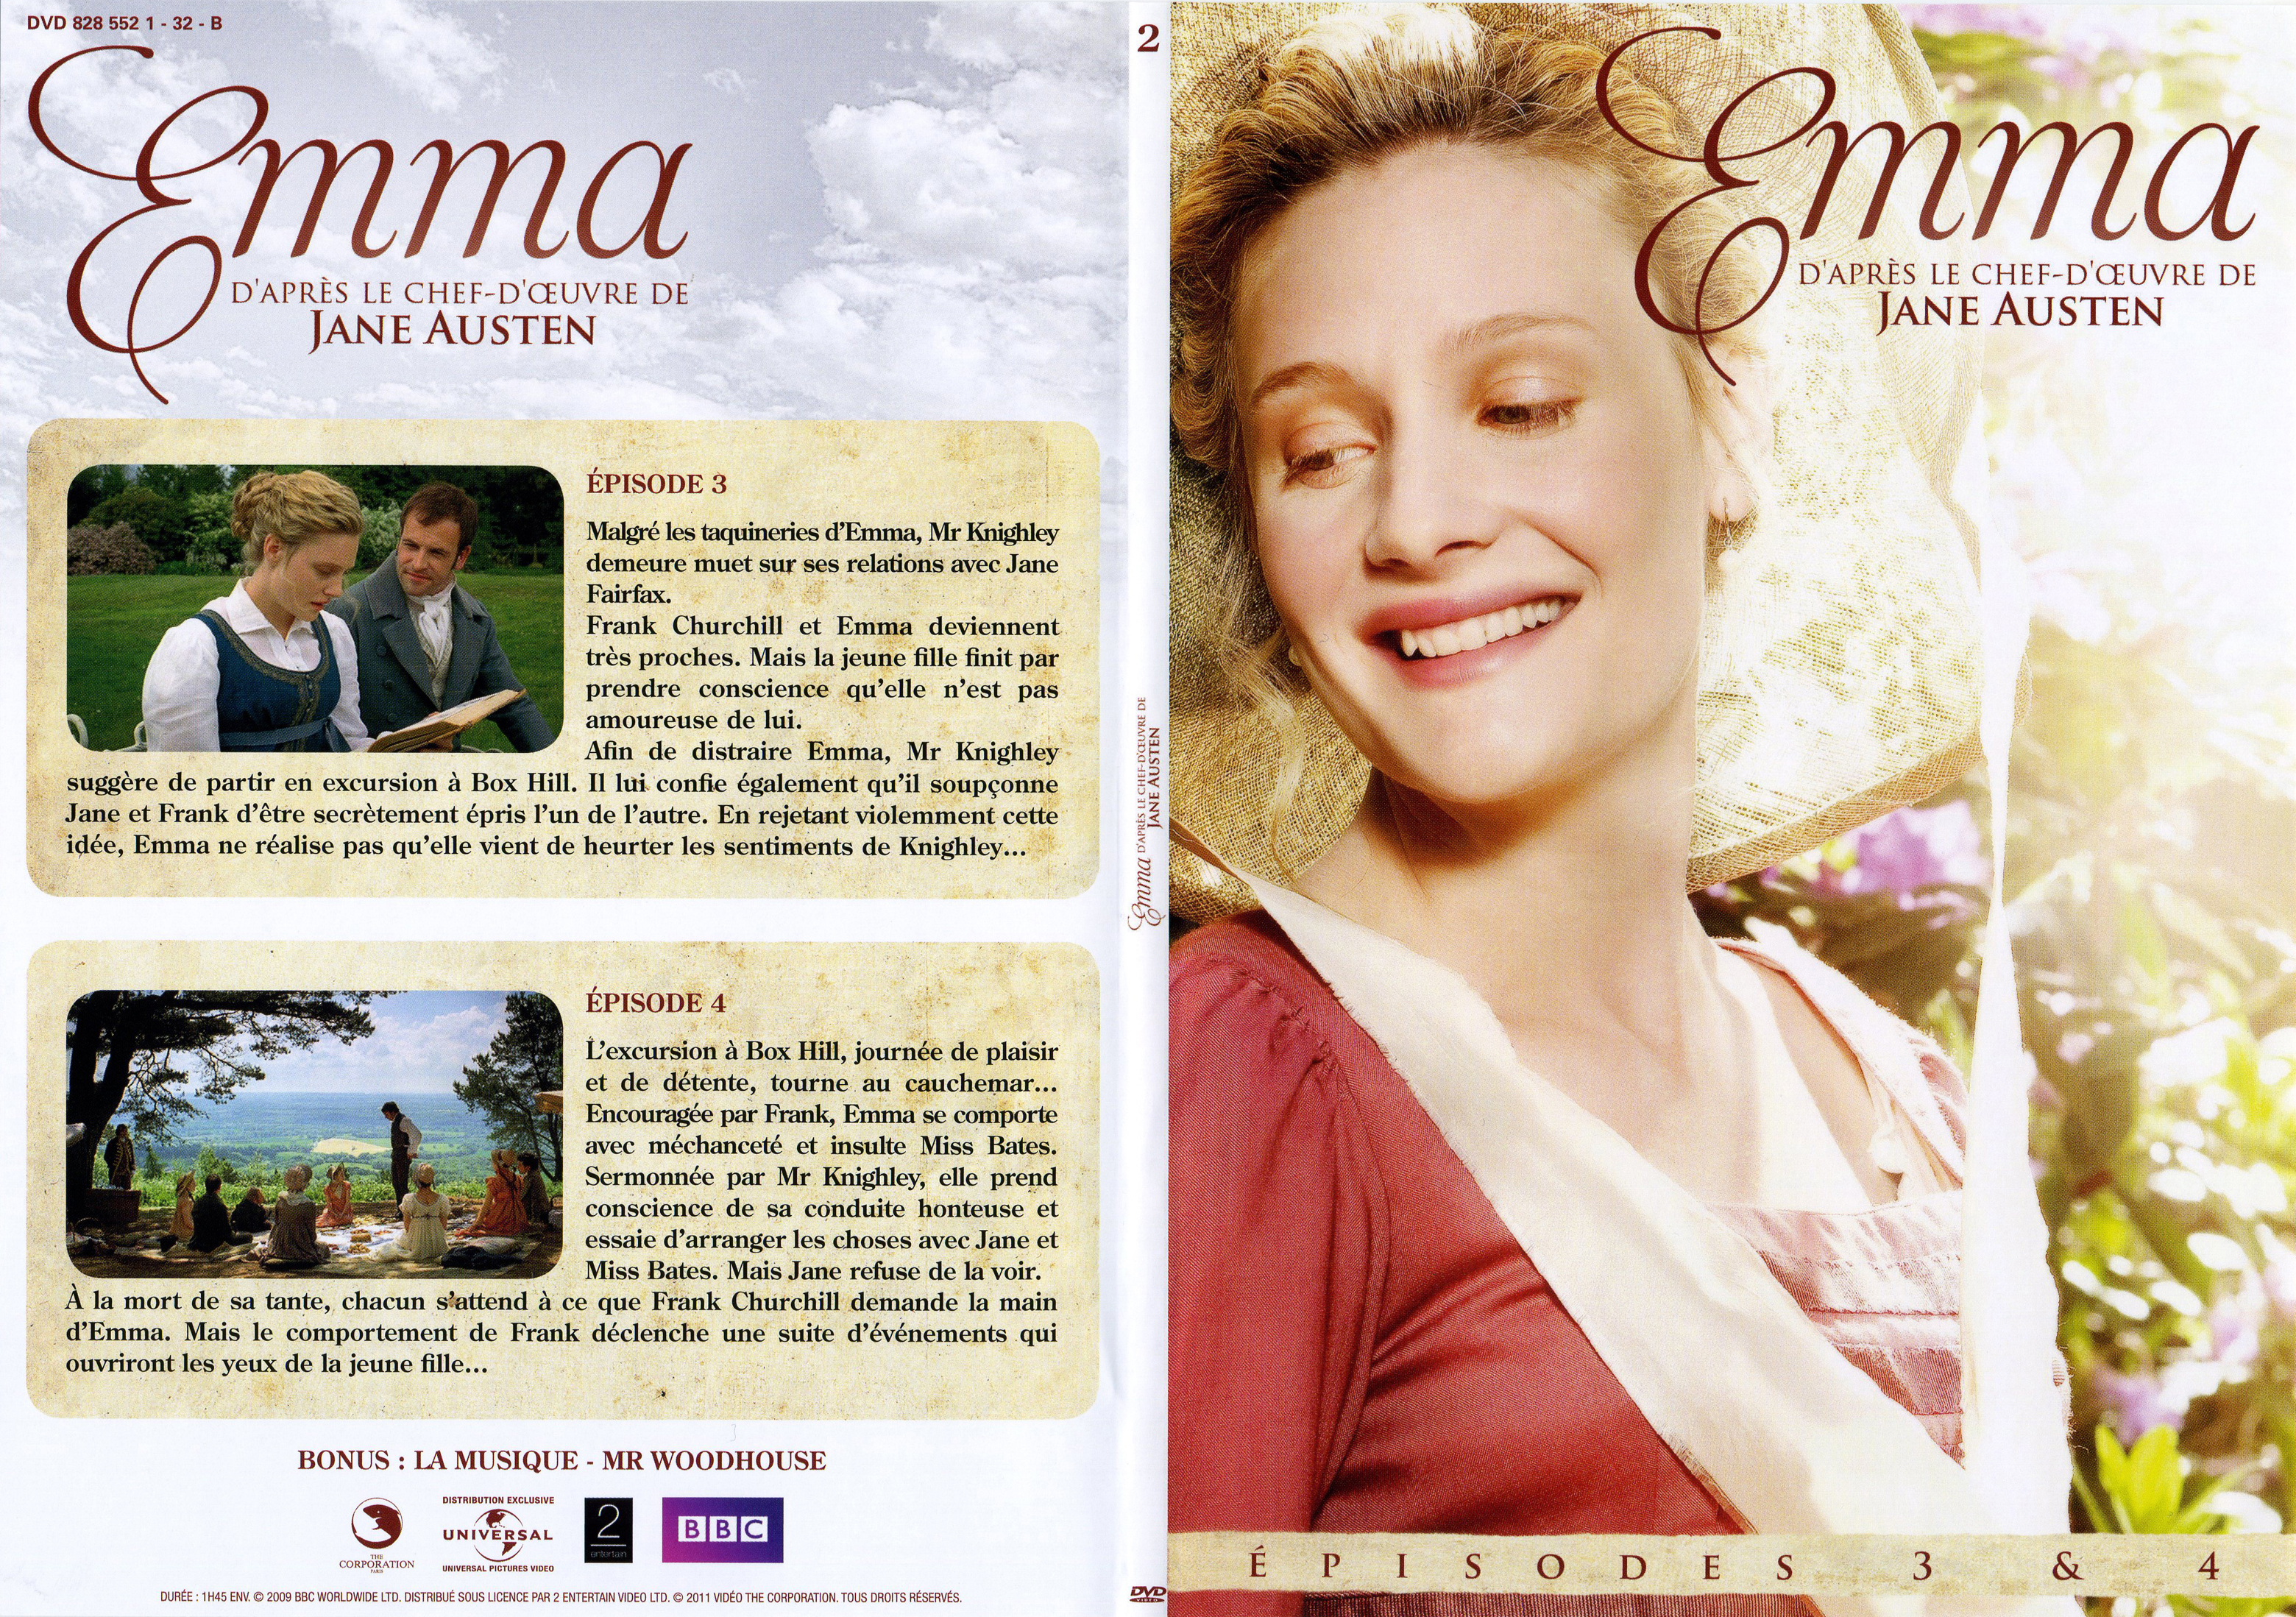 Jaquette DVD Emma DVD 2